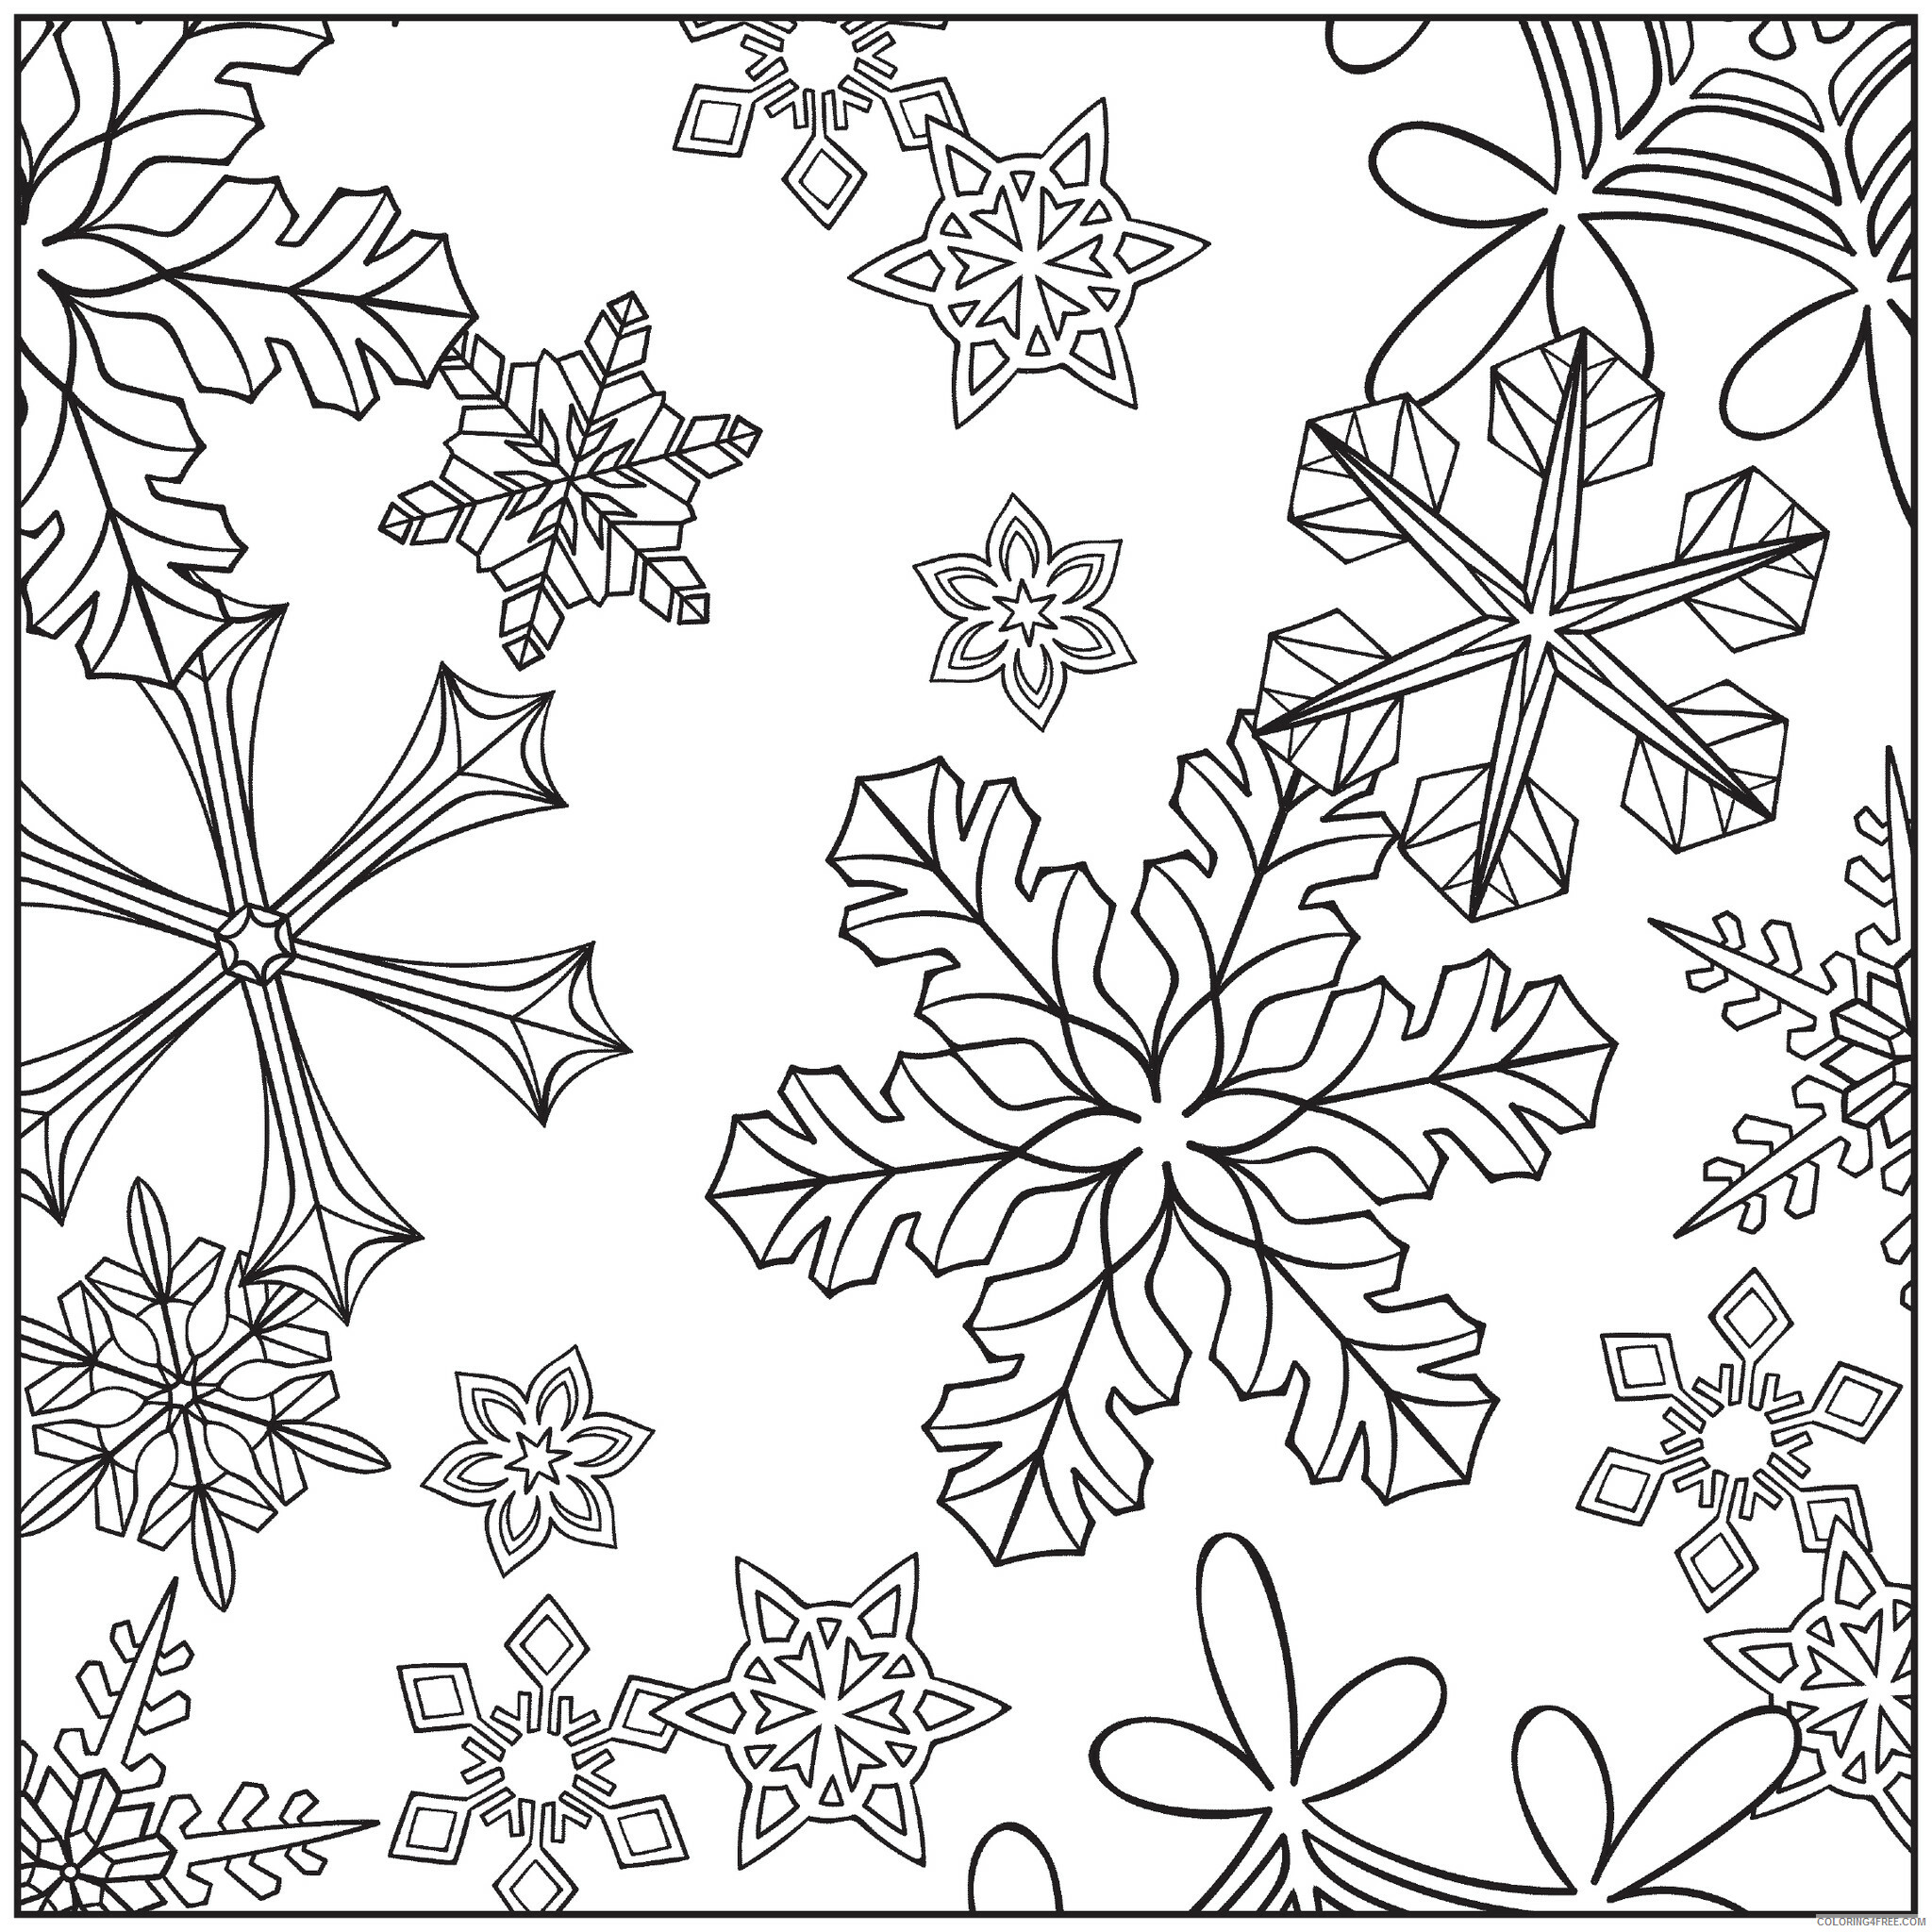 Snowflake Coloring Pages Winter Snowflake 2 Printable 2021 5538 Coloring4free